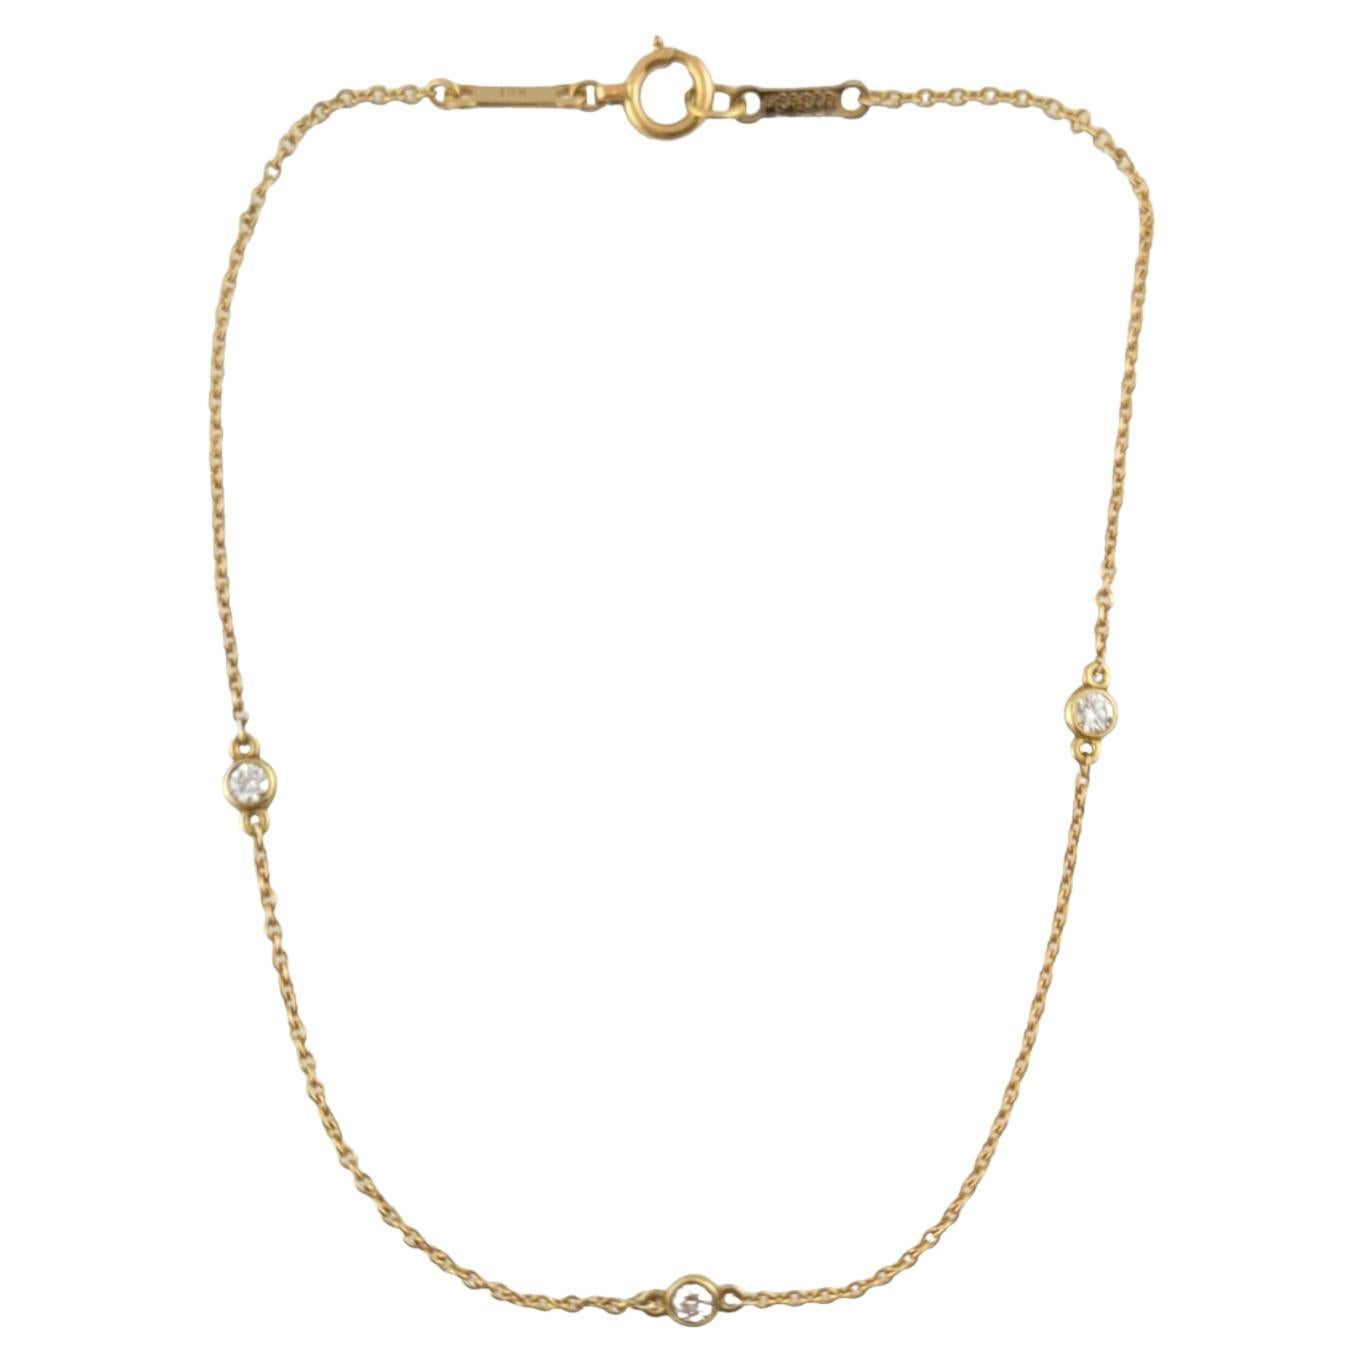 Tiffany & Co Elsa Peretti 18K Yellow Gold Chain Diamond by the Yard Bracelet